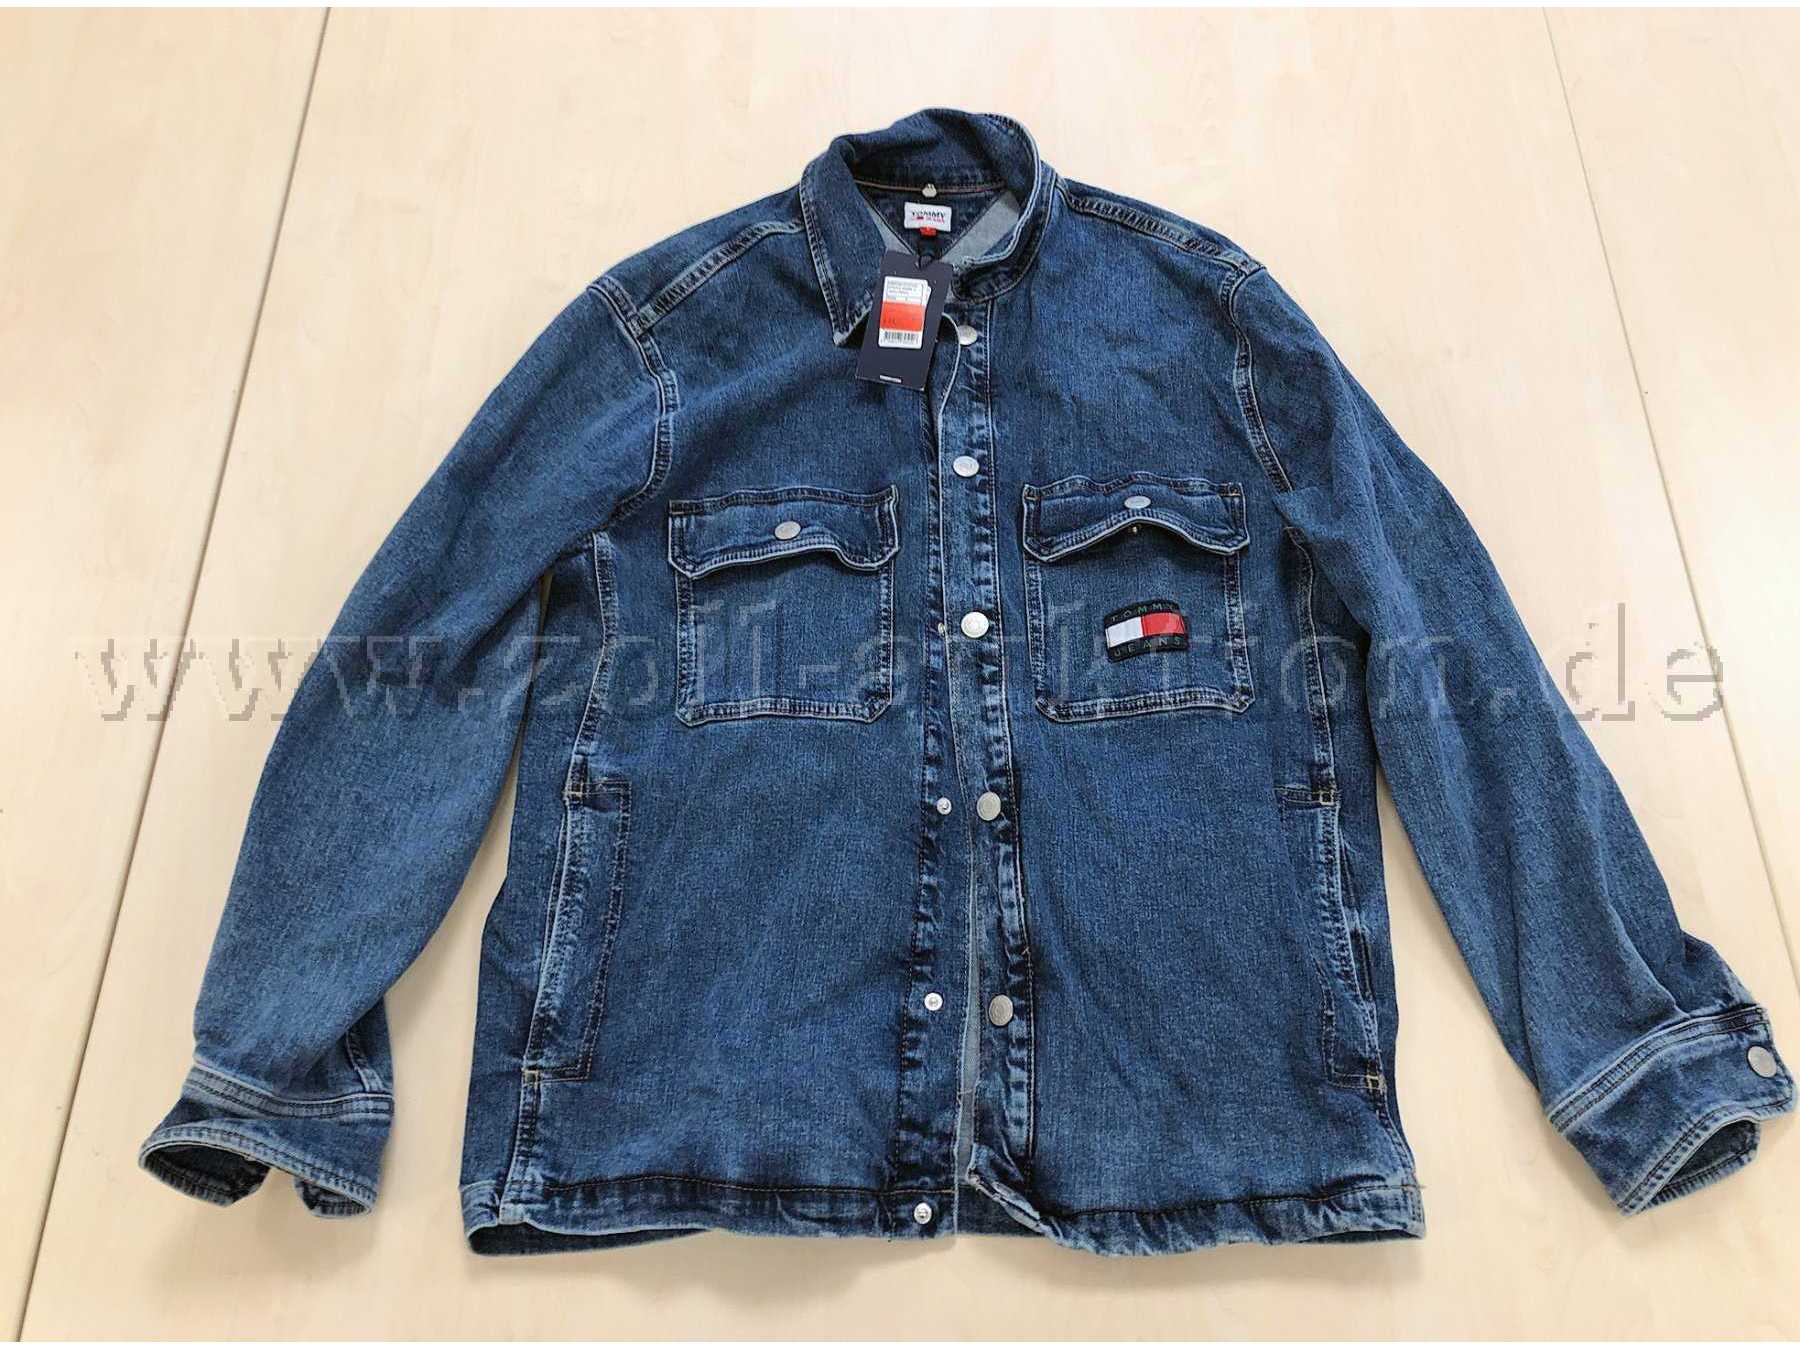 1 neuwertige Jeans-Jacke von Tommy Hilfiger "Utility Shirt Jacket", Größe L , Farbe Jeansblau.